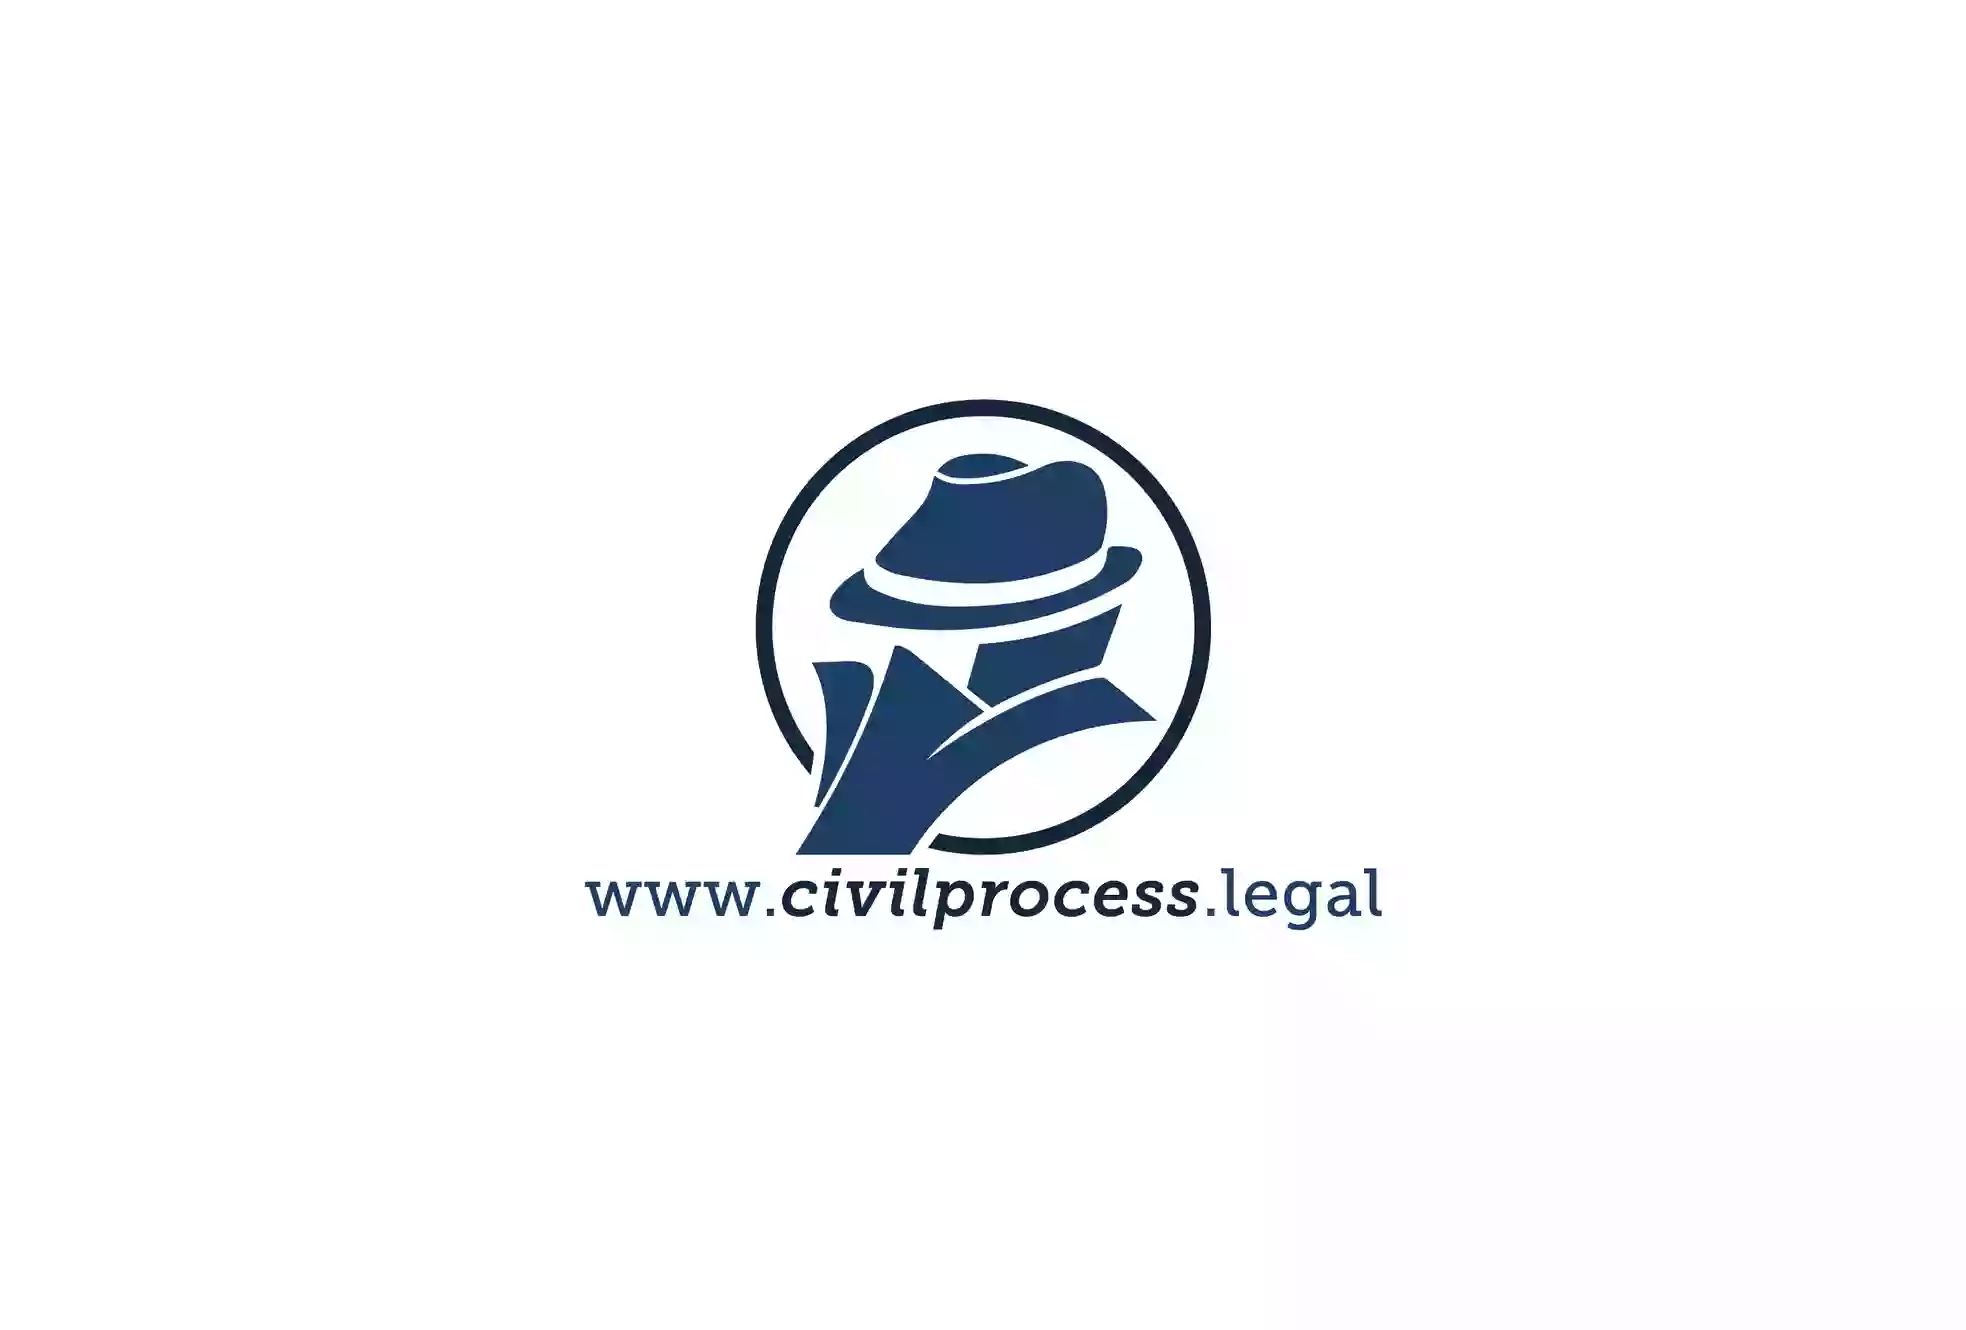 Civil Process Legal